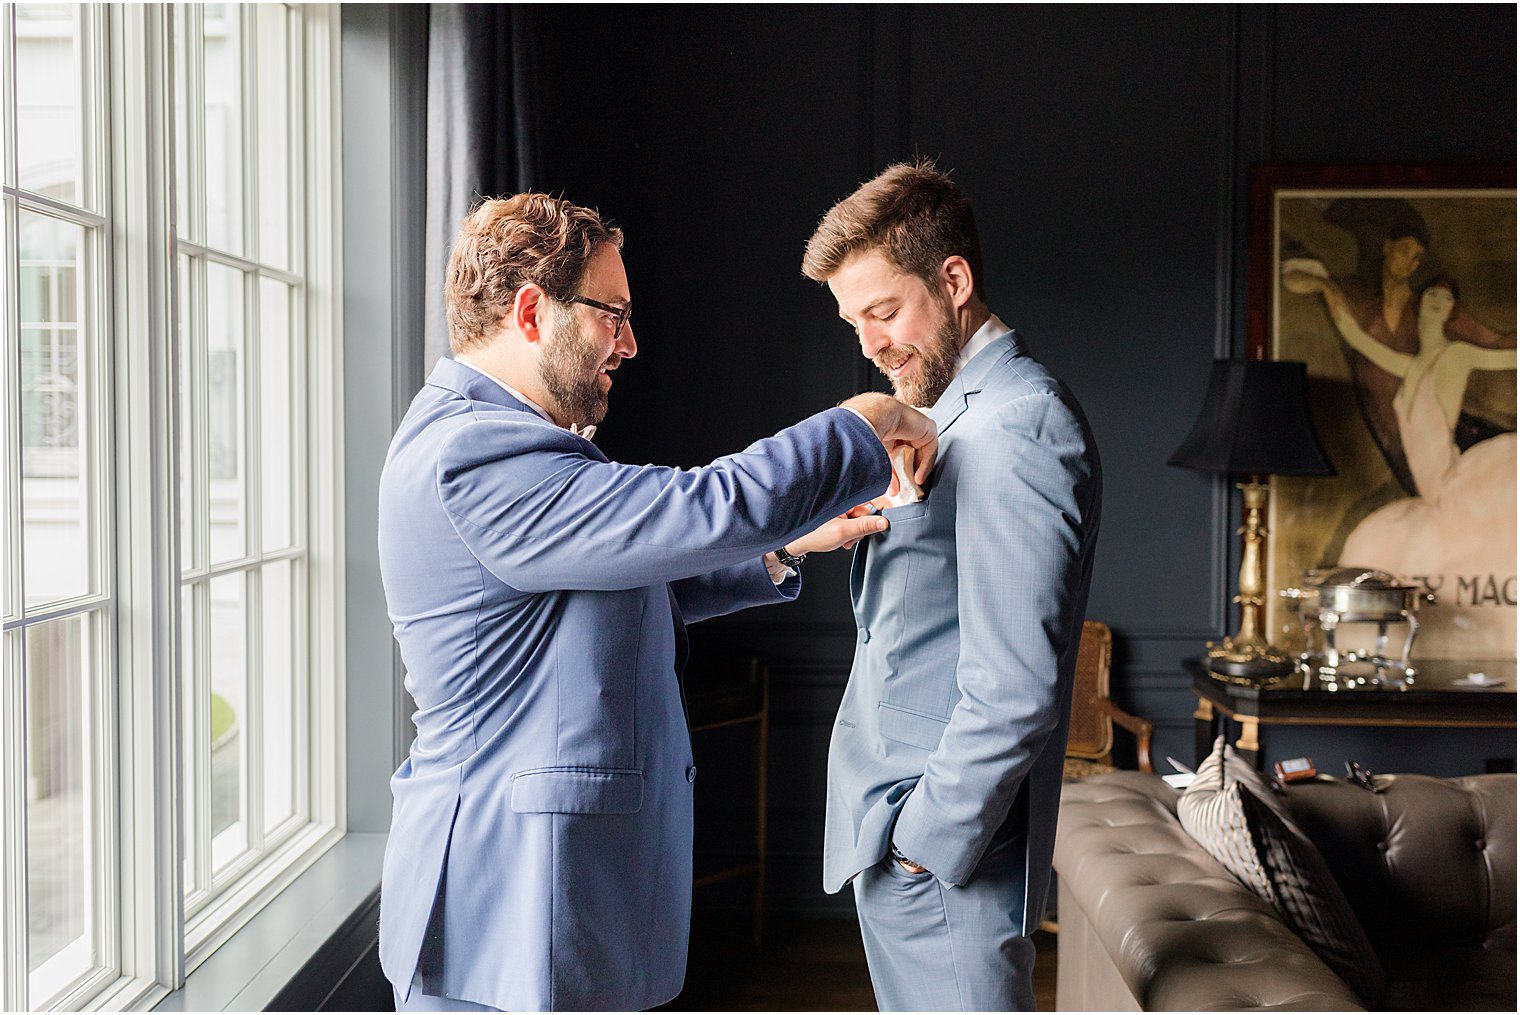 groomsman adjusts tie for groom during wedding day prep